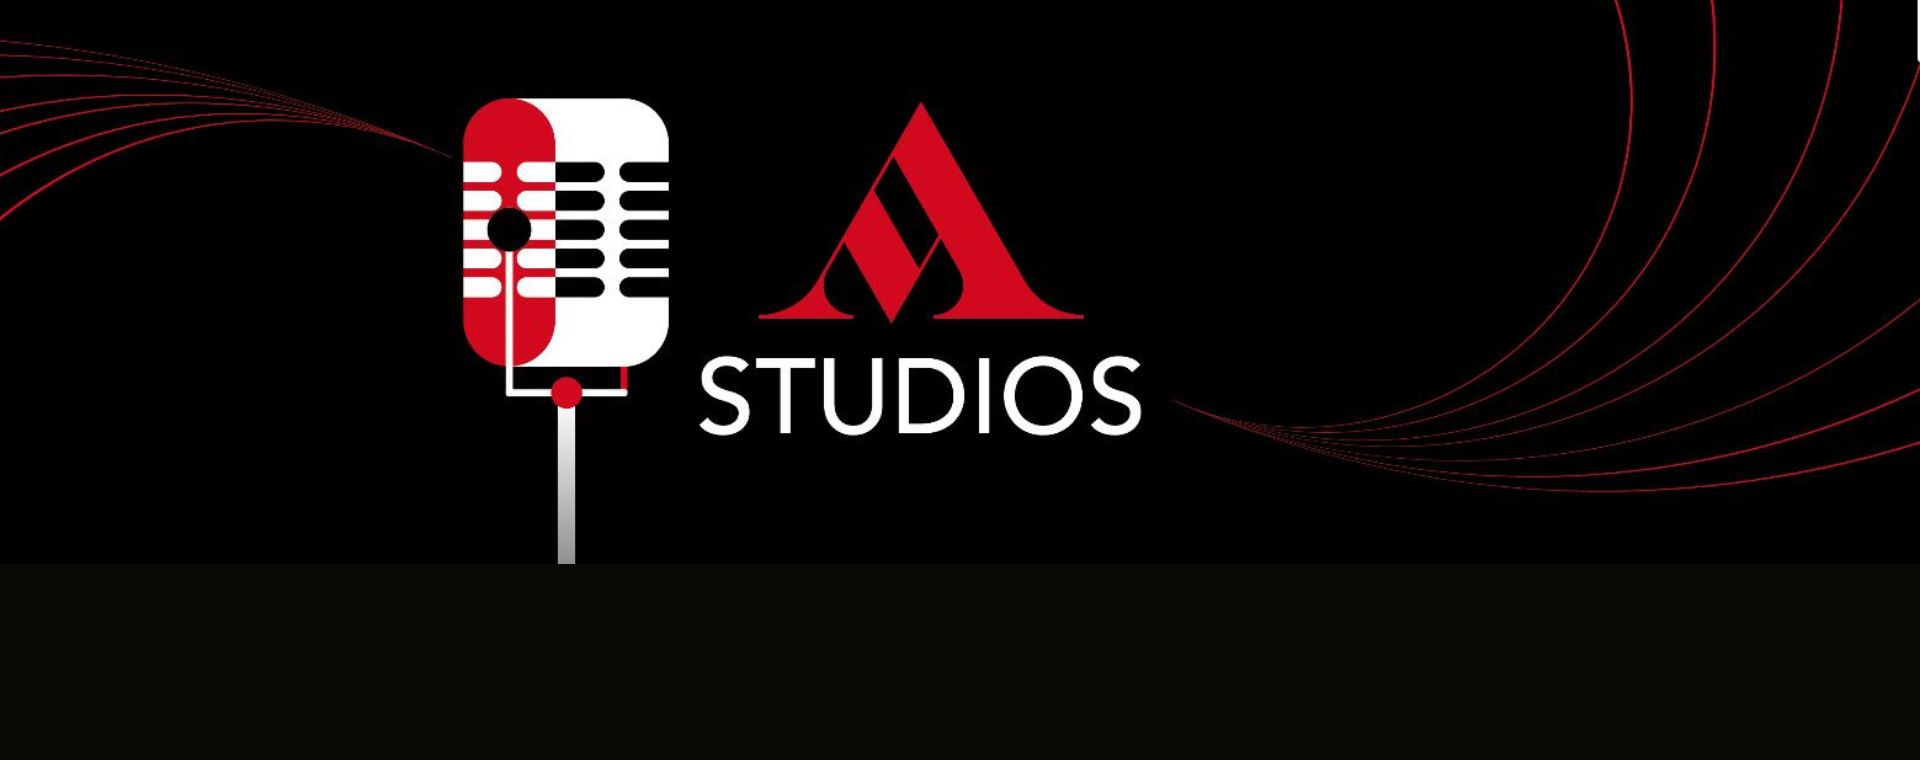 Mondadori Studios: a year of podcasts, a year of emotions |  Mondadori Books